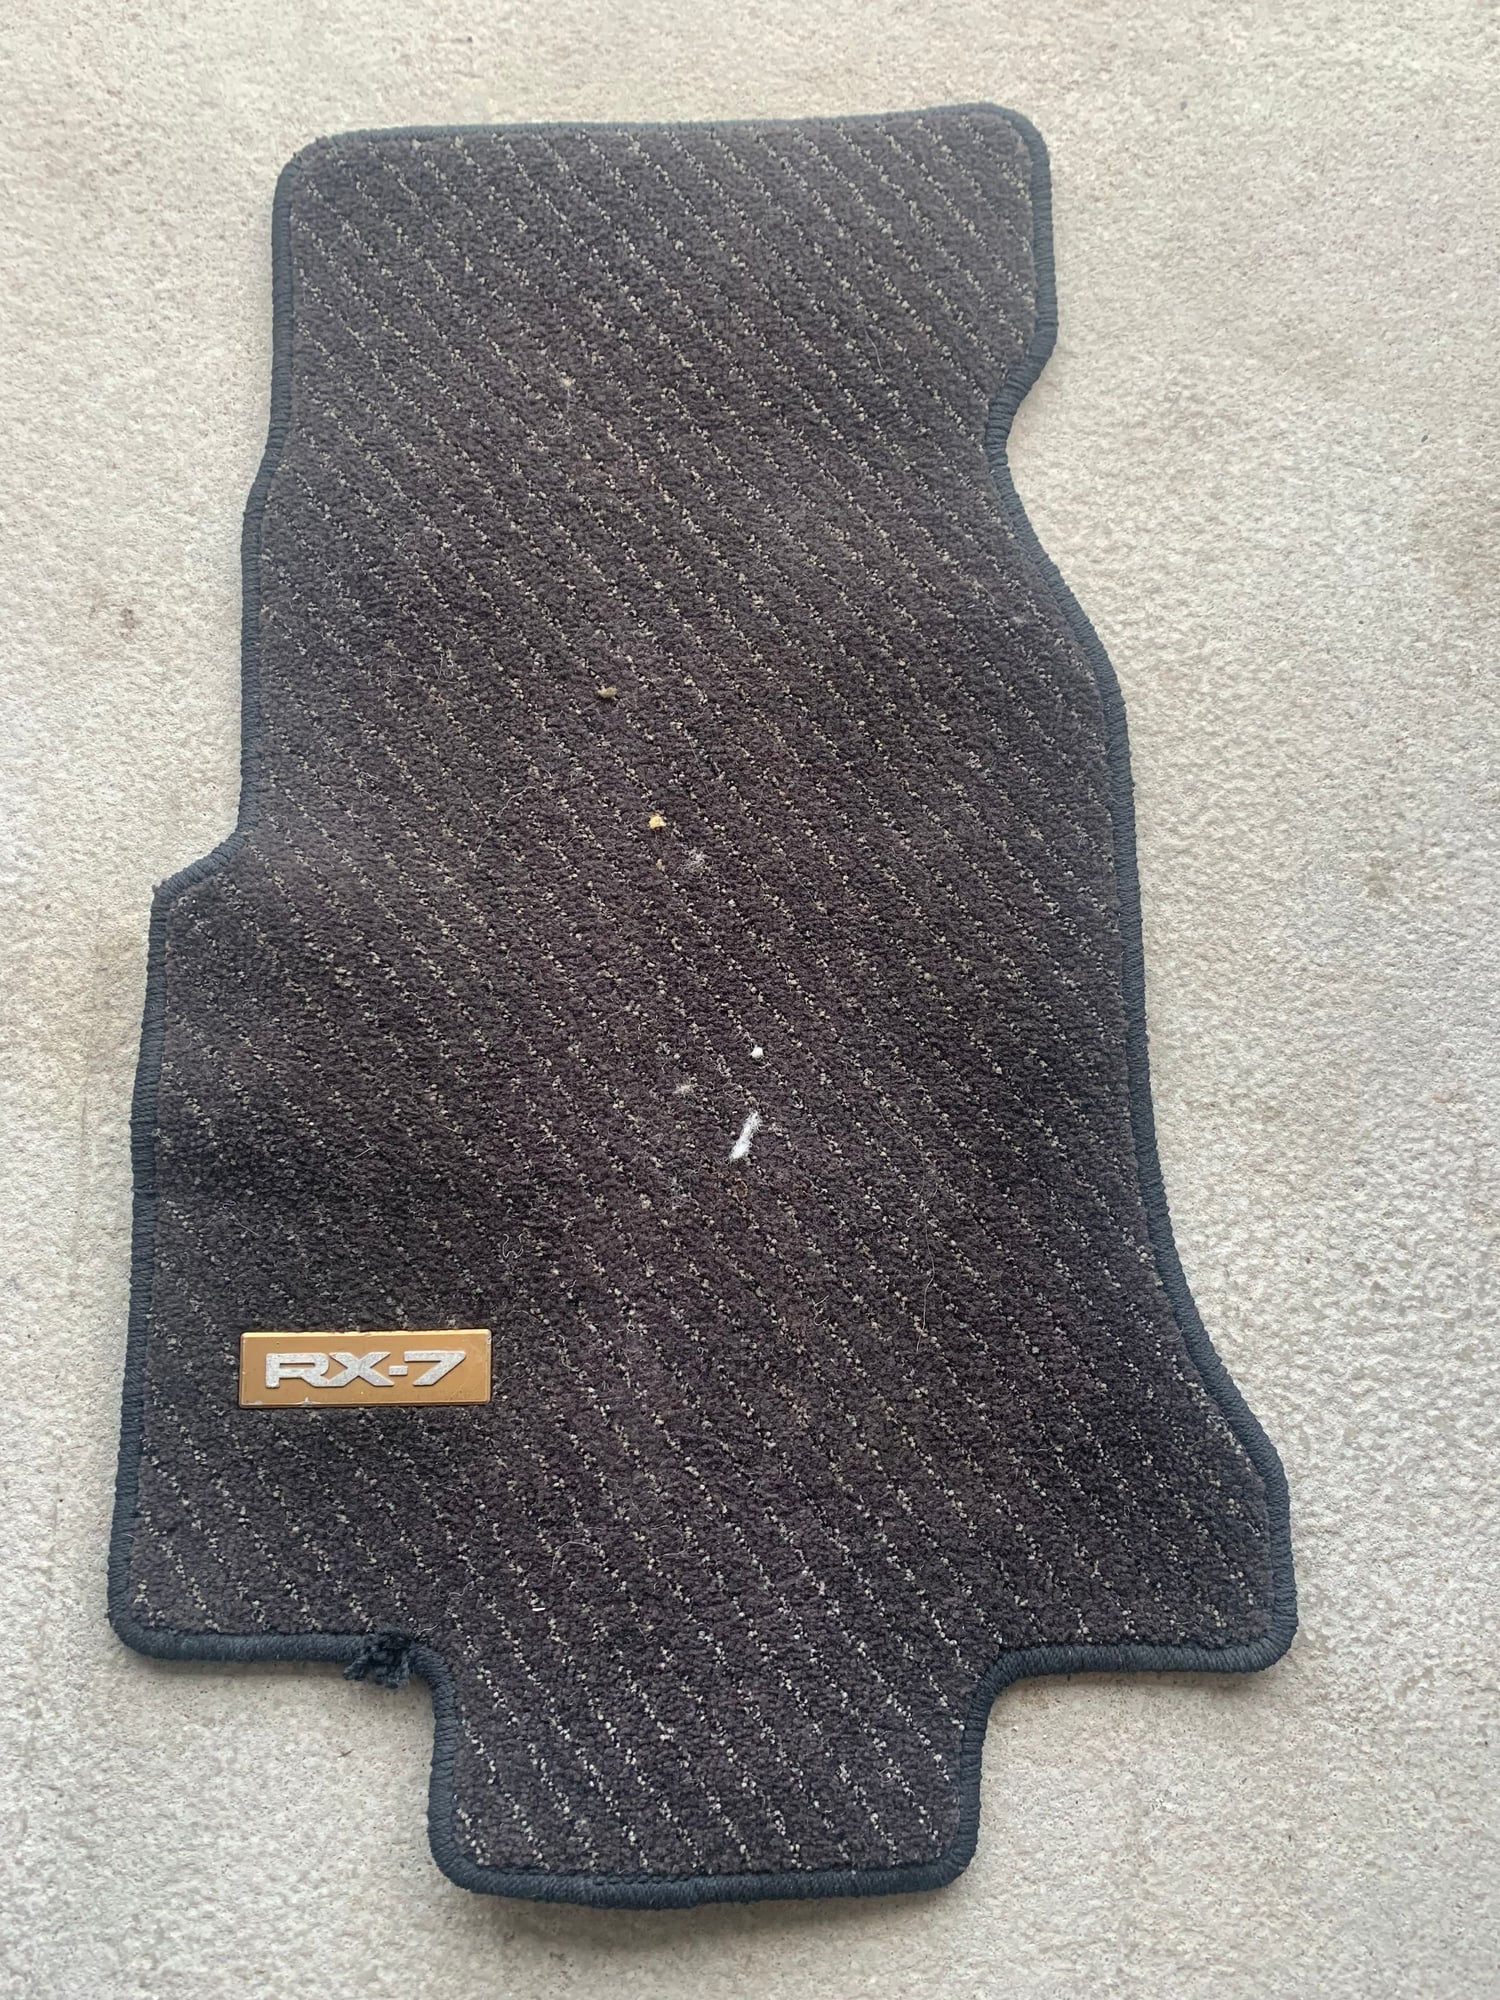 Interior/Upholstery - LH OEM Floor Mat (us driver side) - Used - 1991 to 2002 Mazda RX-7 - Ogden, UT 84401, United States